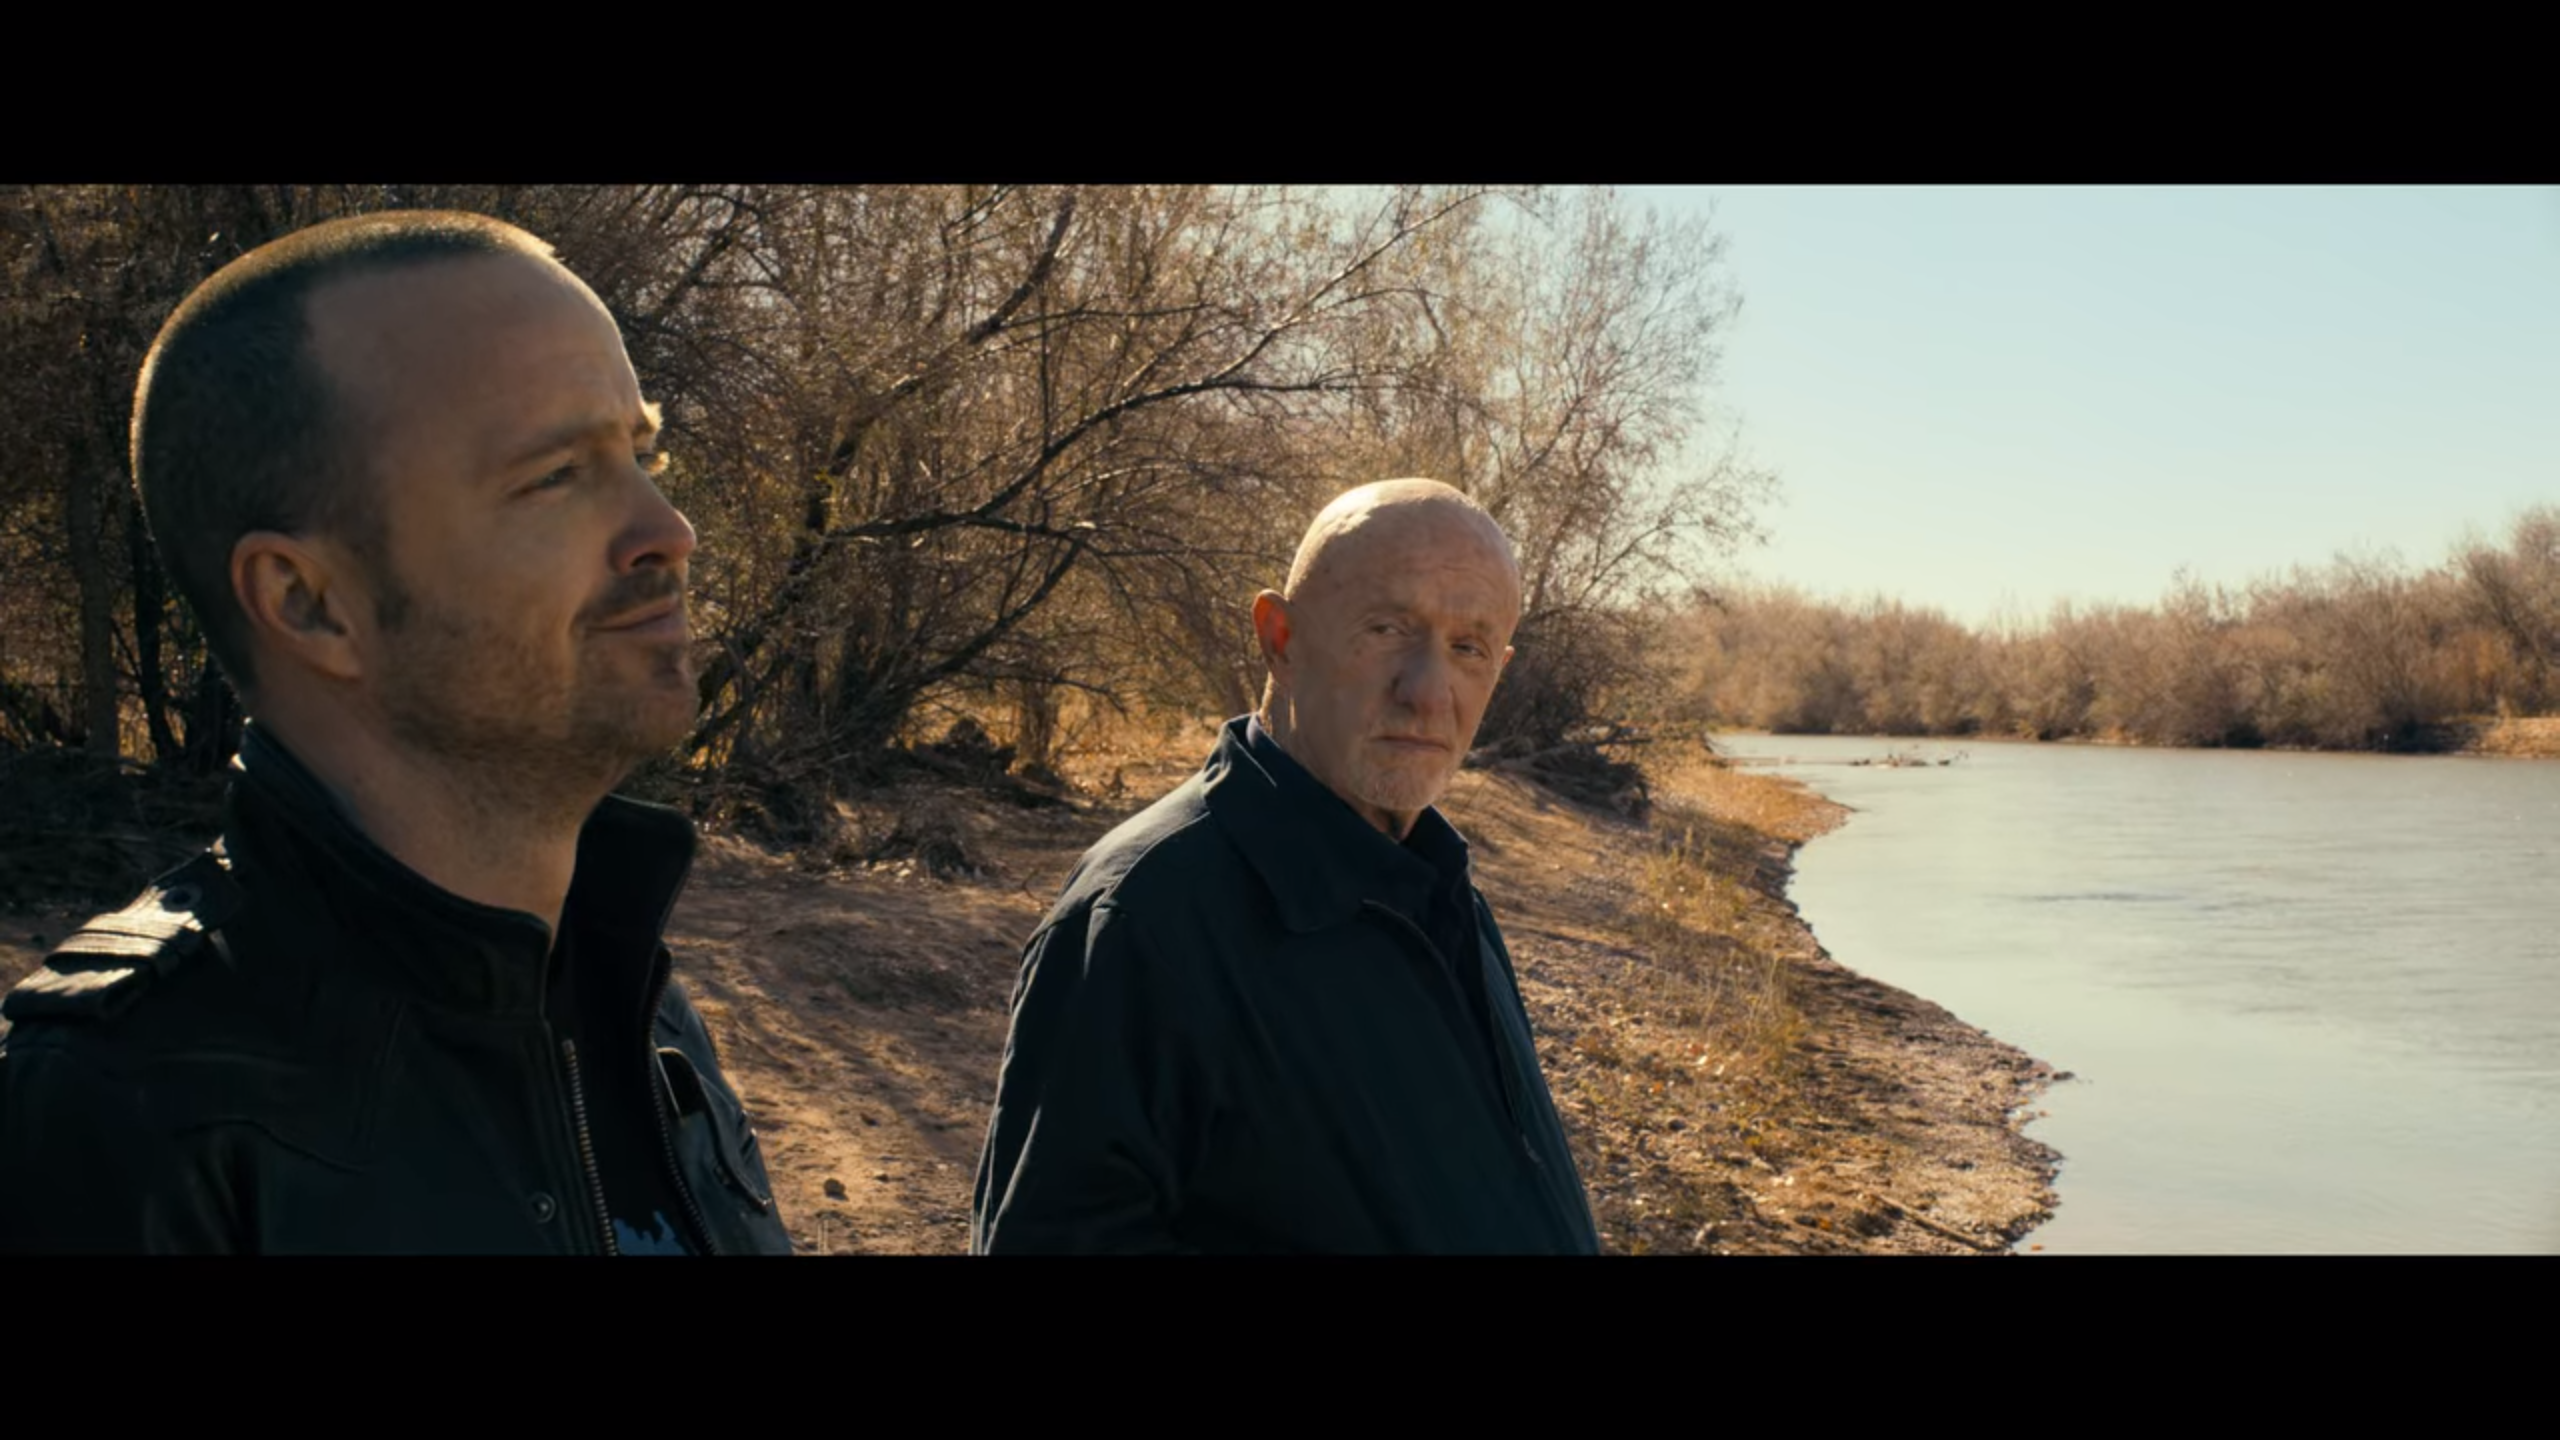 El Camino: A Breaking Bad Movie' Trailer: Jesse Pinkman's on the Run